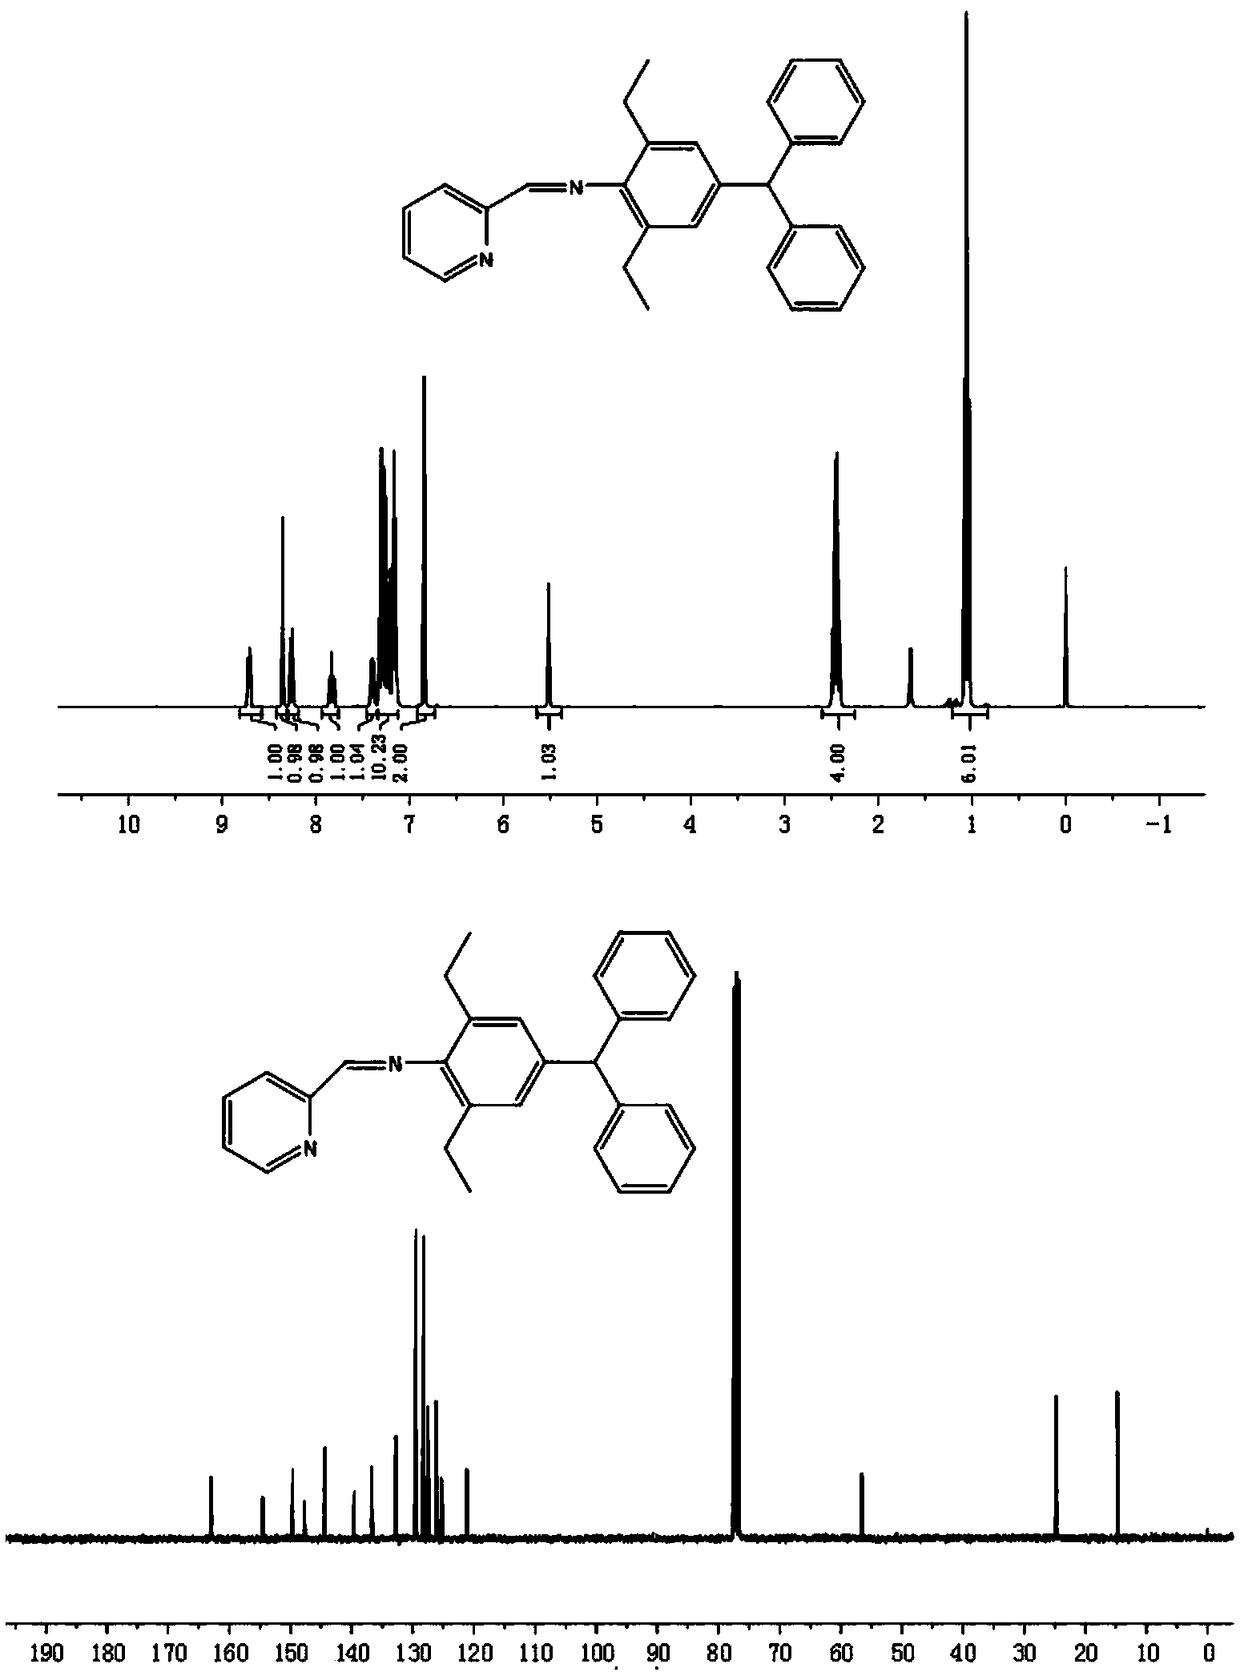 Method for preparing palladium pyridine imine (II) catalyst and preparing oil-phase oligomer by catalyzing ethylene